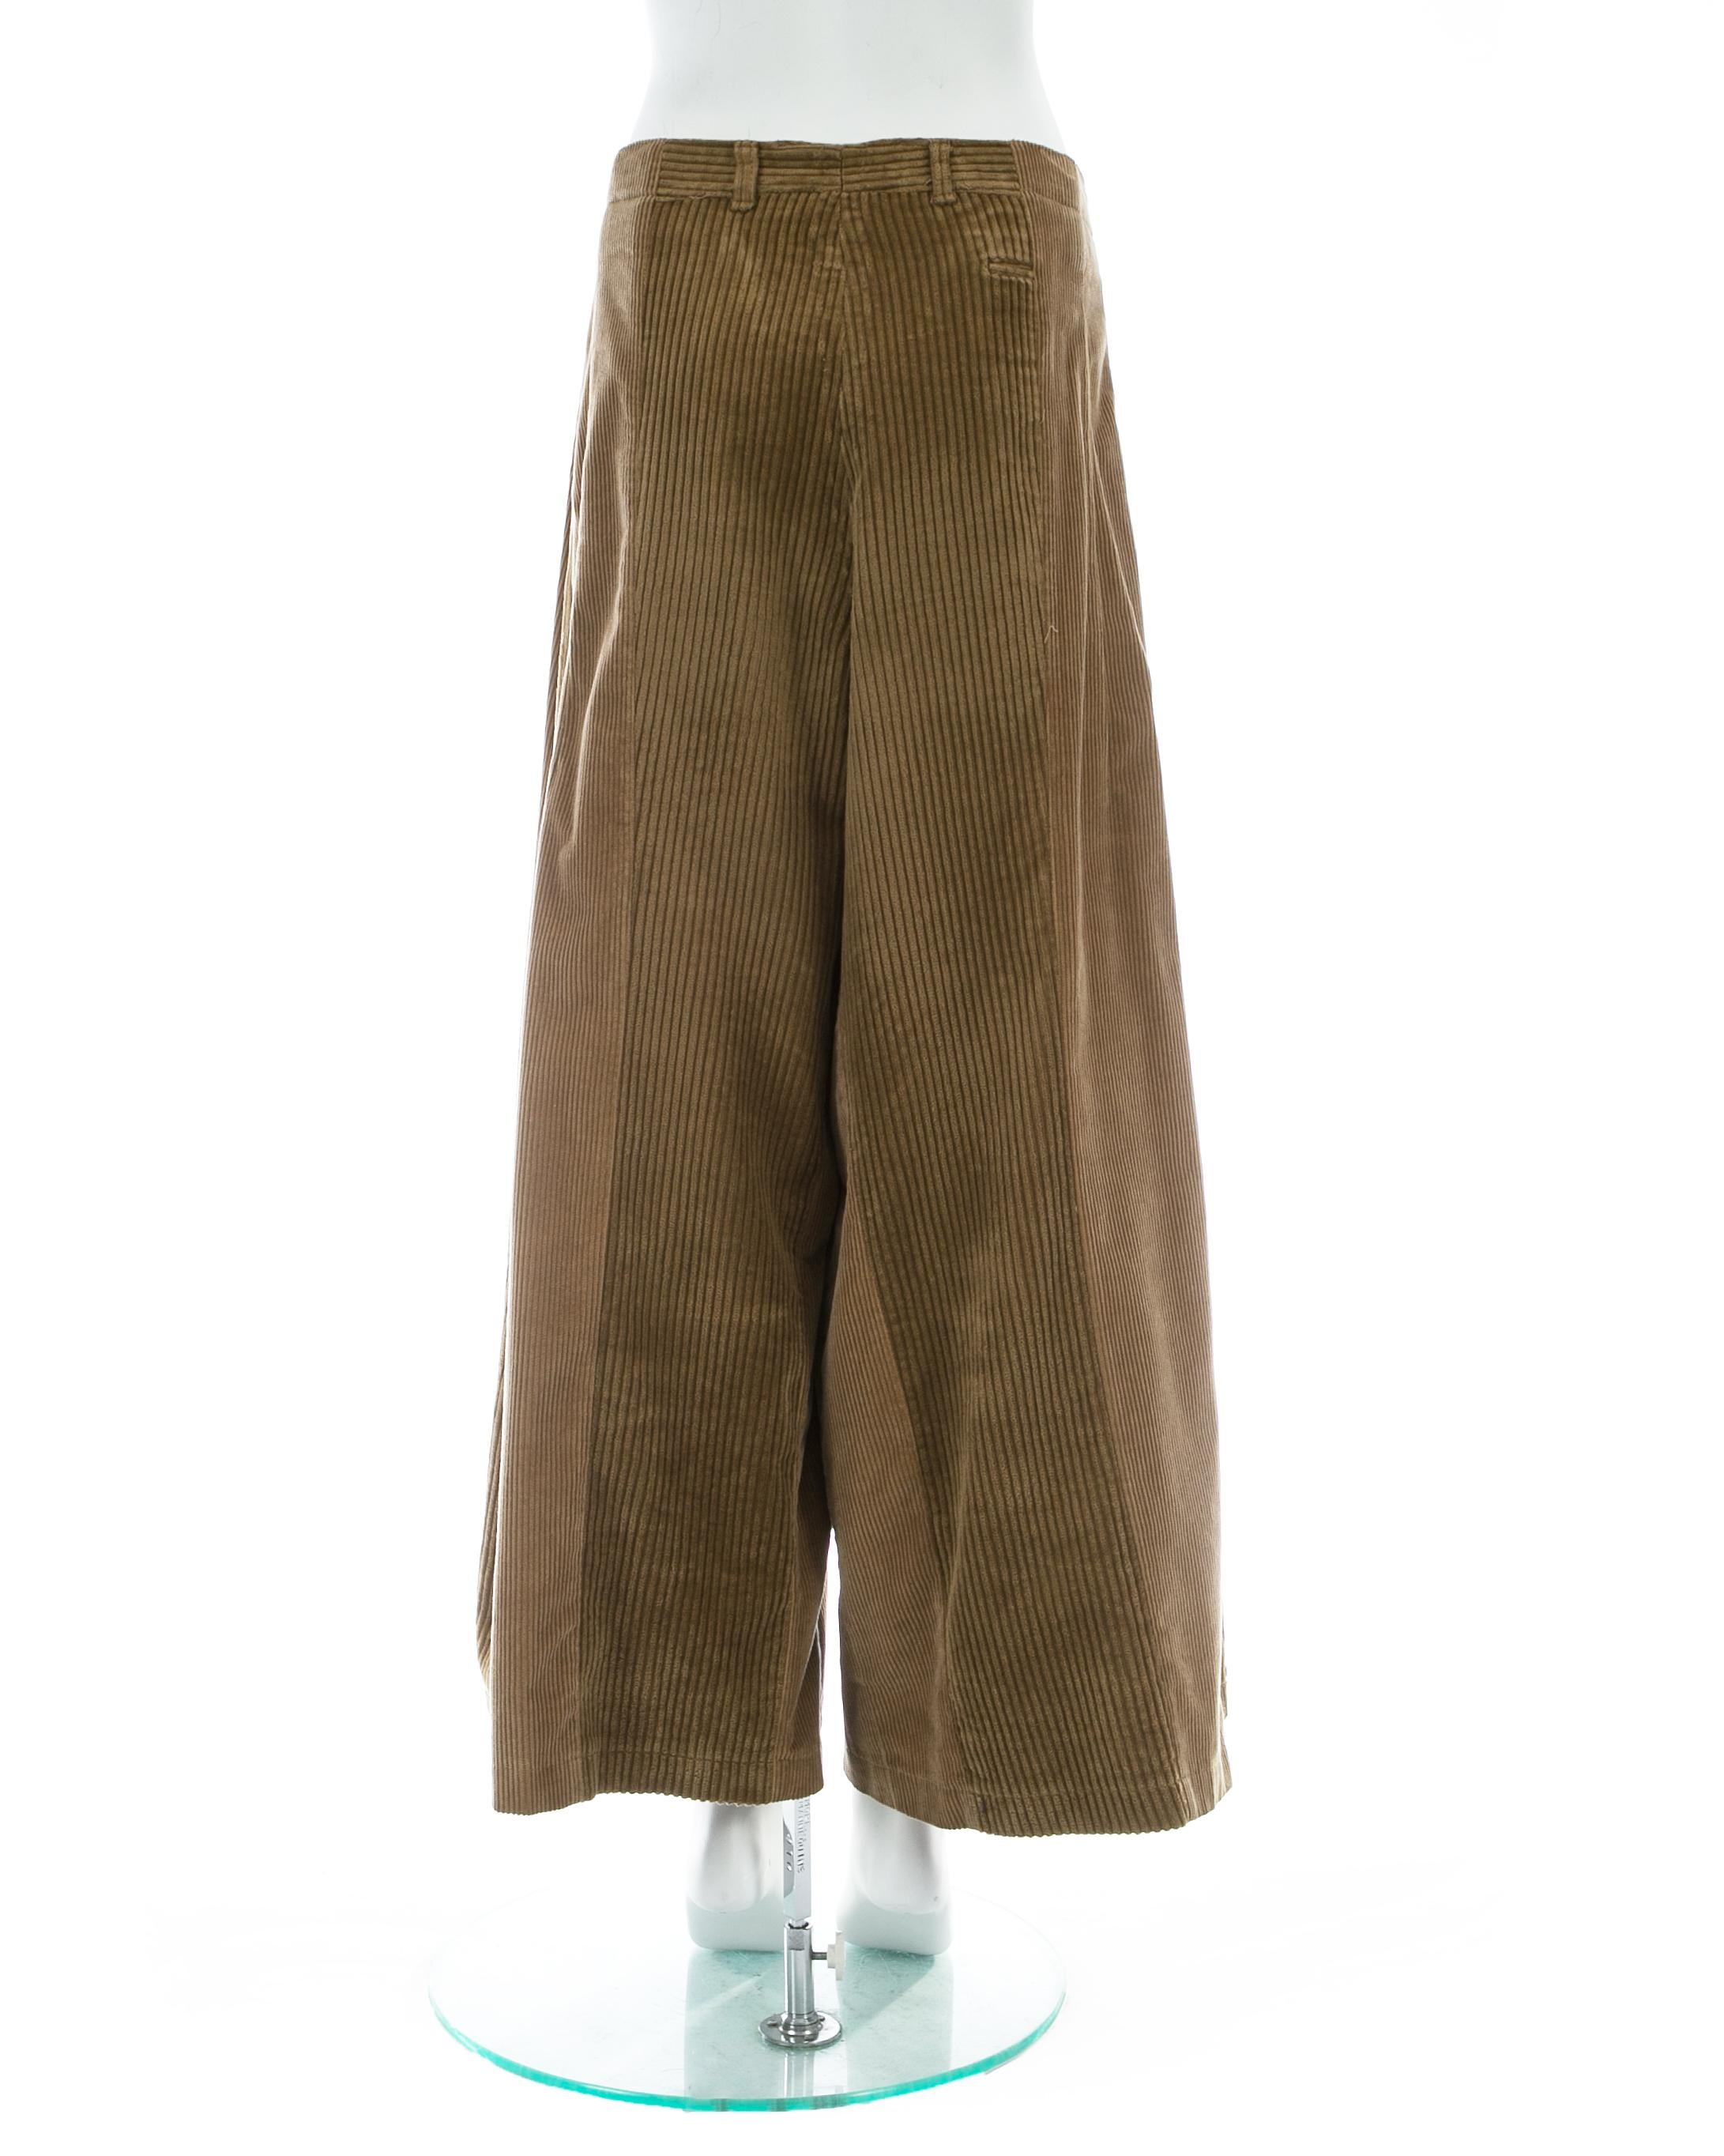 Women's Martin Margiela artisanal tan corduroy reconstructed oversized pants, fw 2000 For Sale